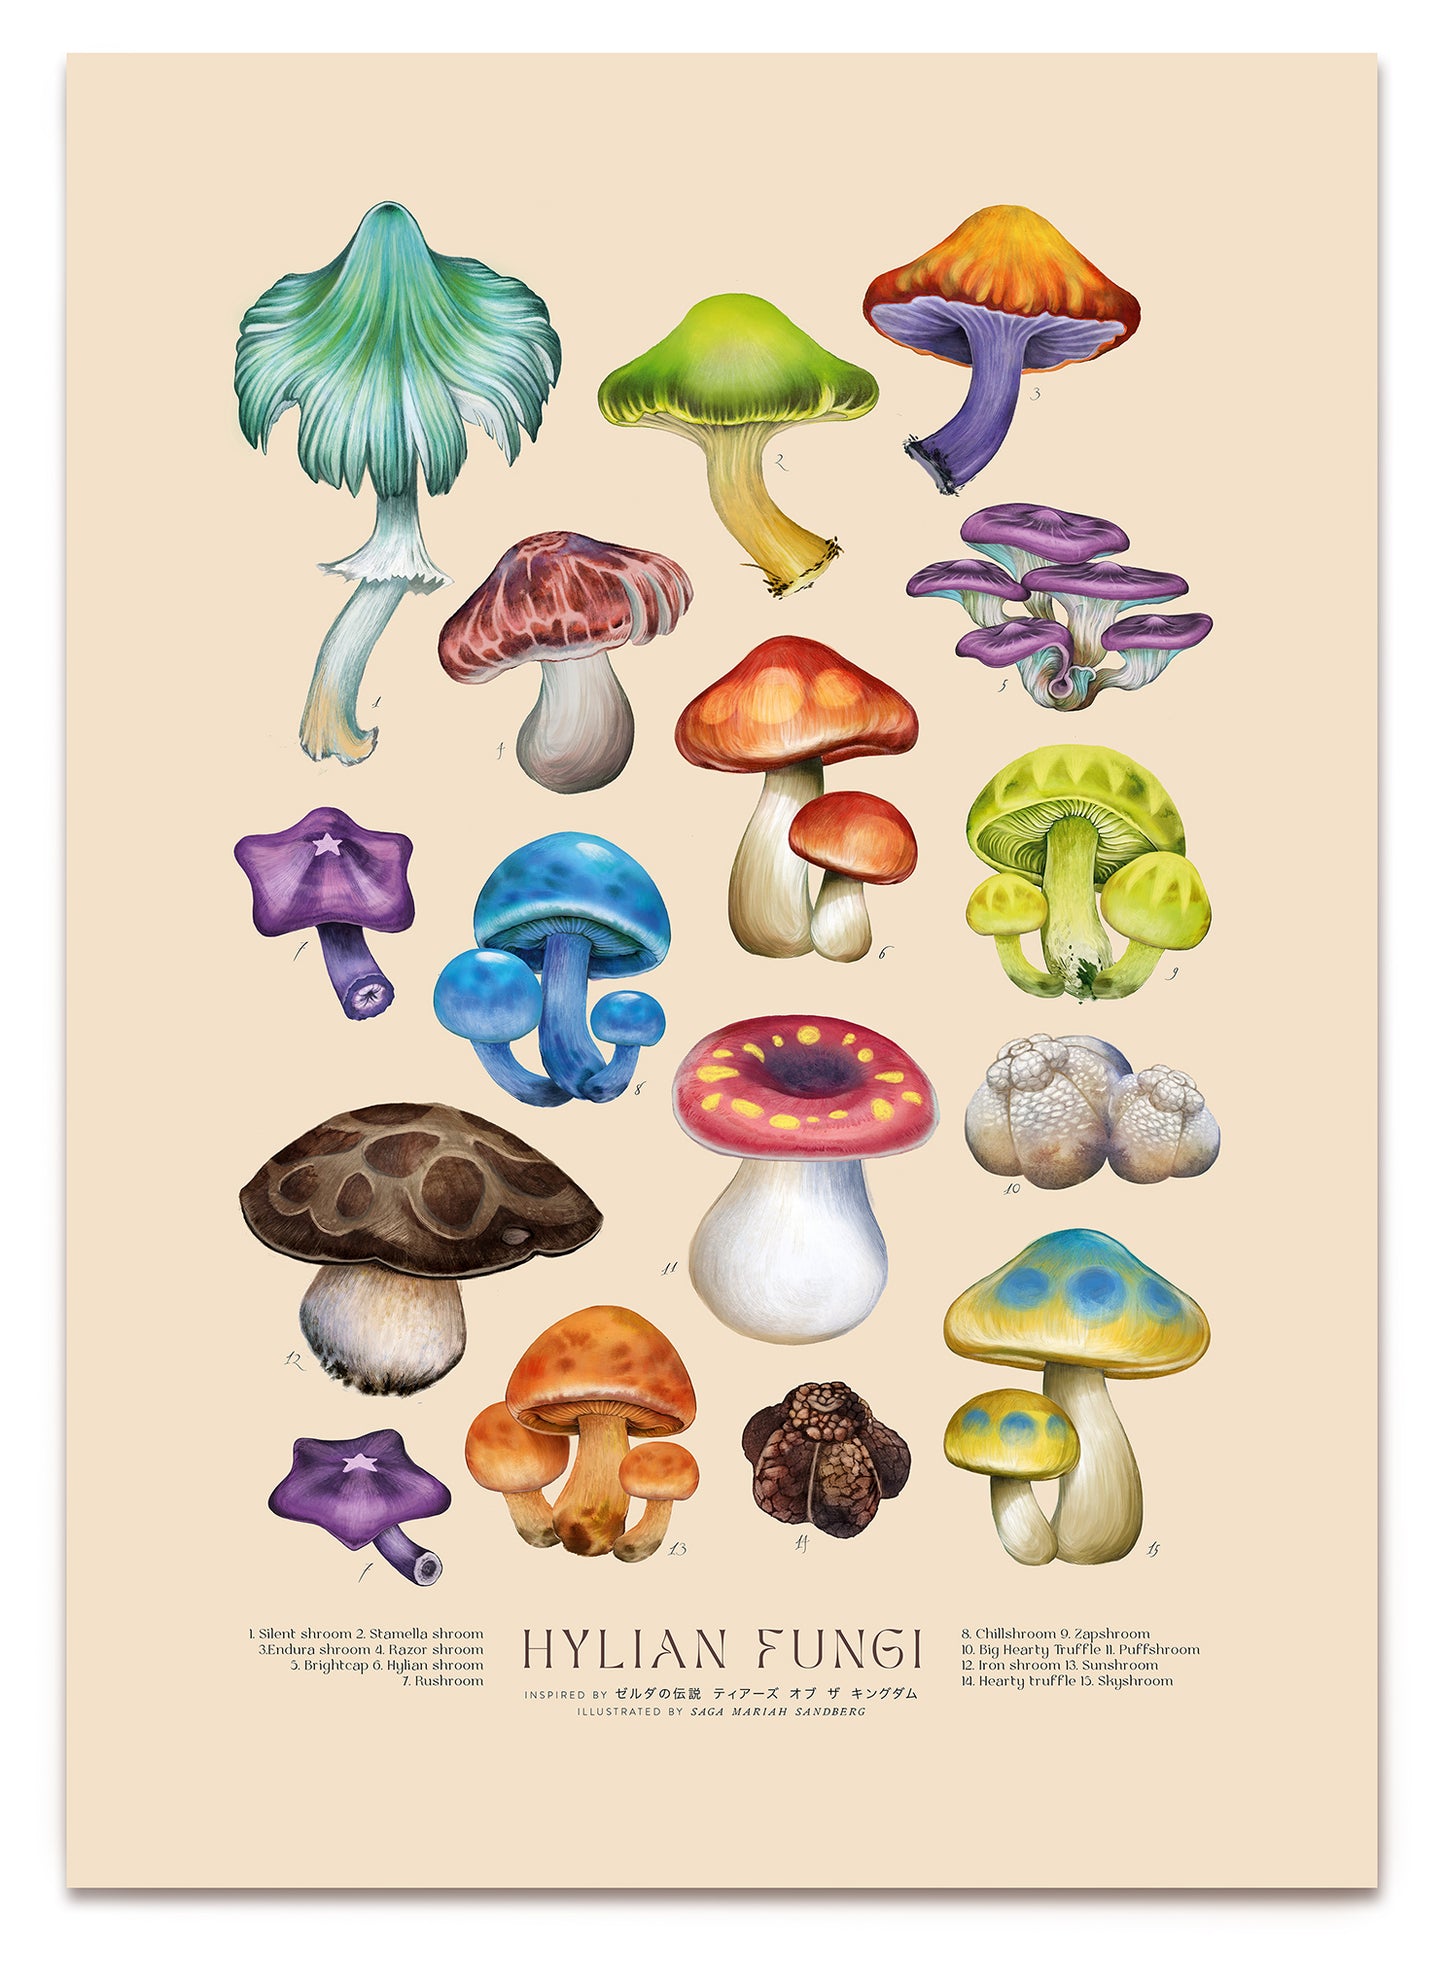 Hylian Fungi